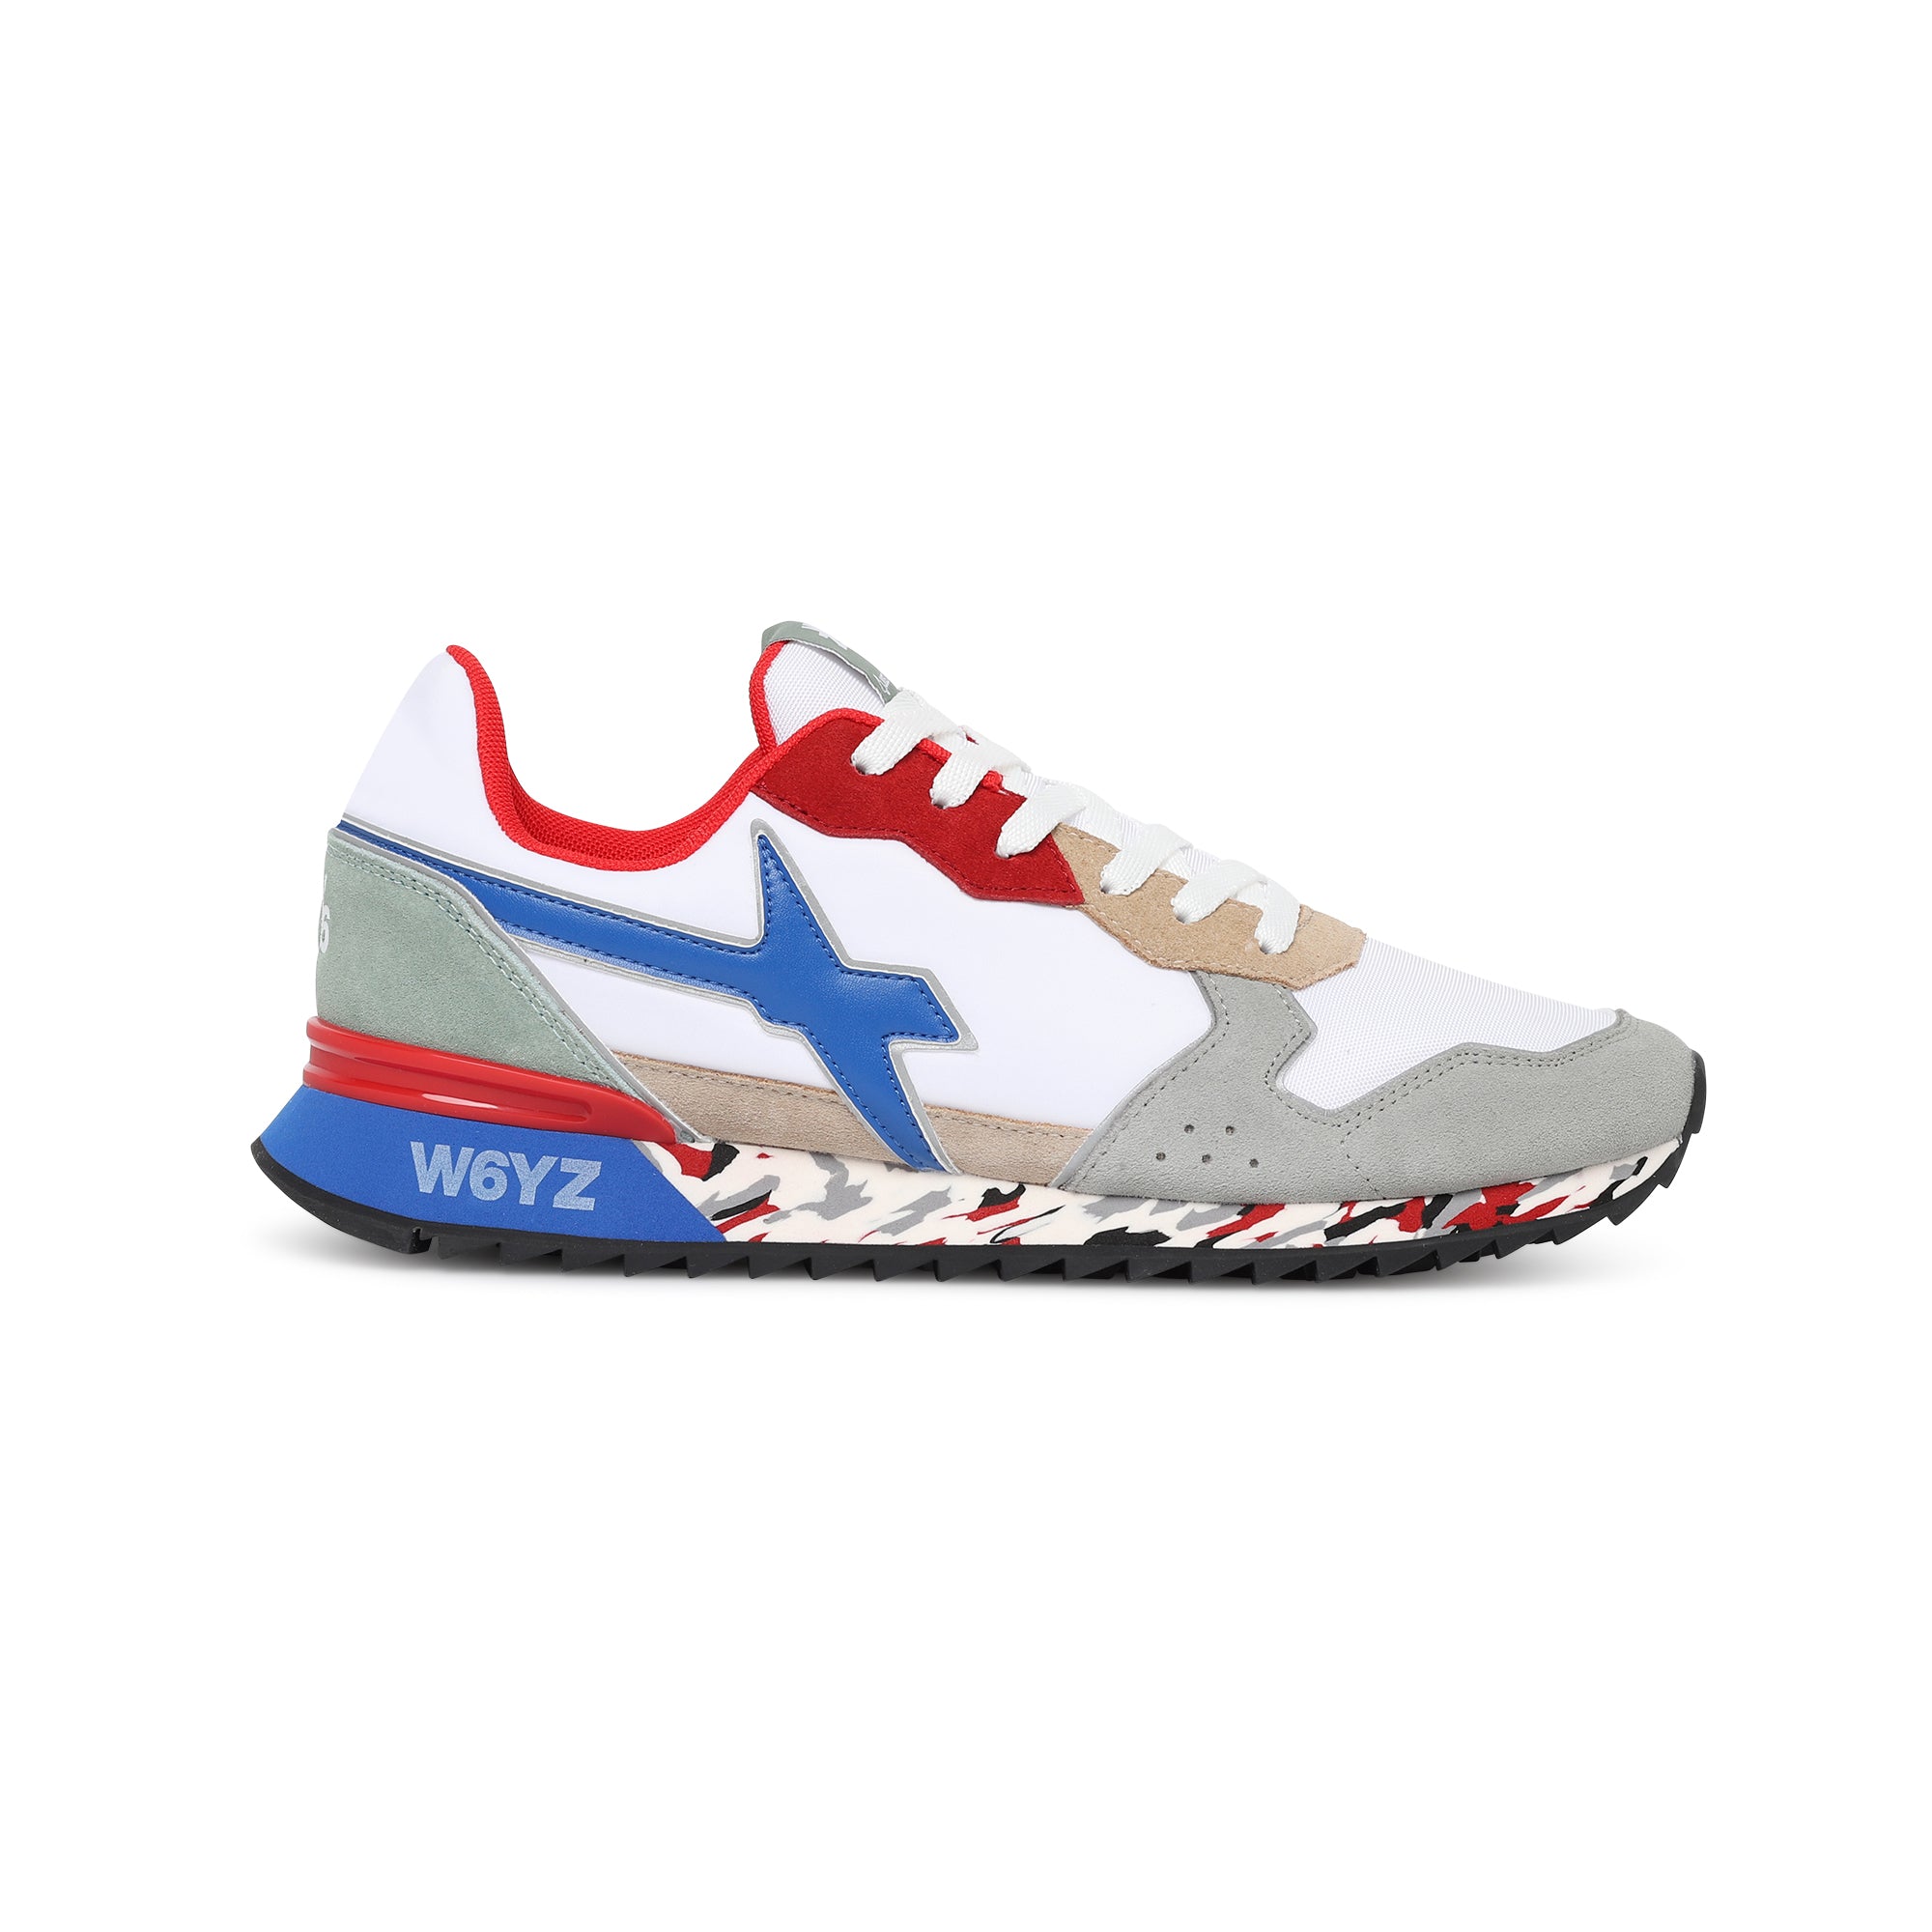 Sneaker w6yz  grey-white-azure-red uomo 